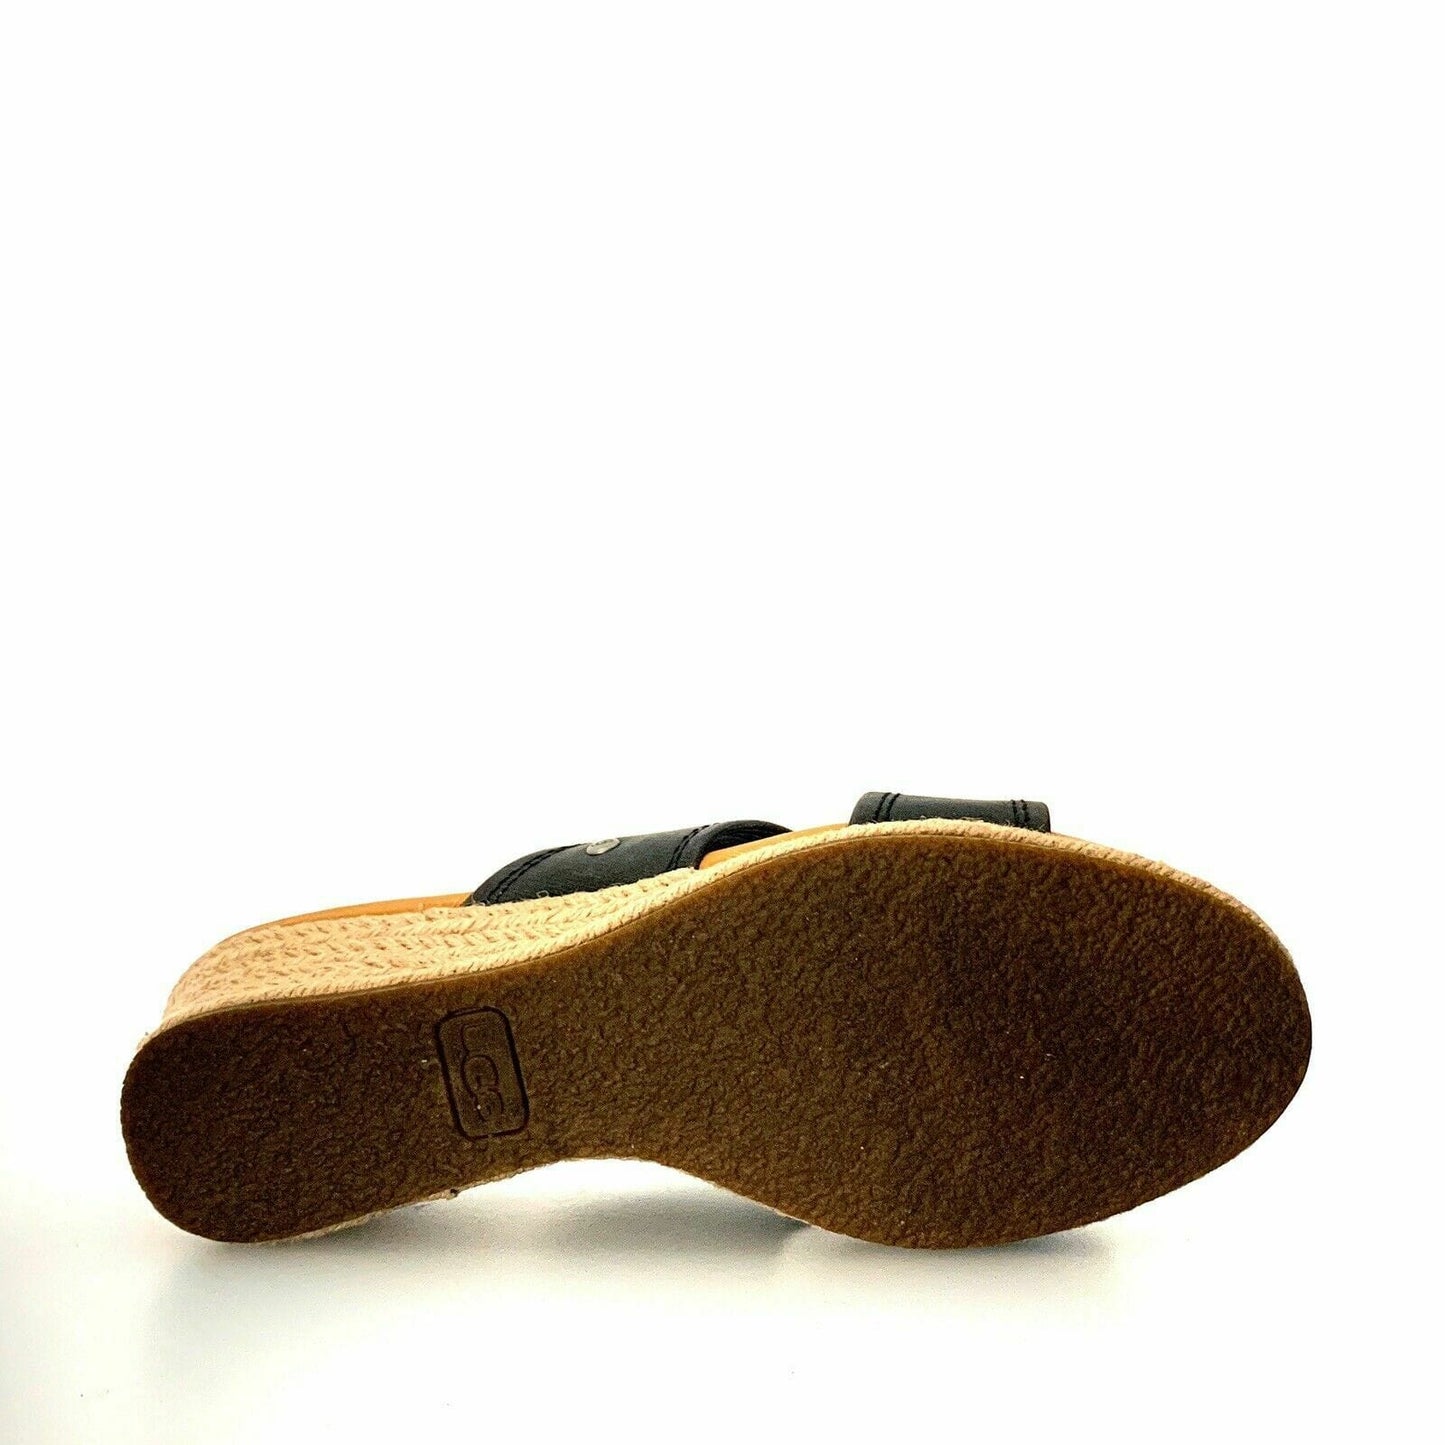 UGG Australia Womens “Gwyn” Size 7.5 Black Wedge Leather Sandals Slides